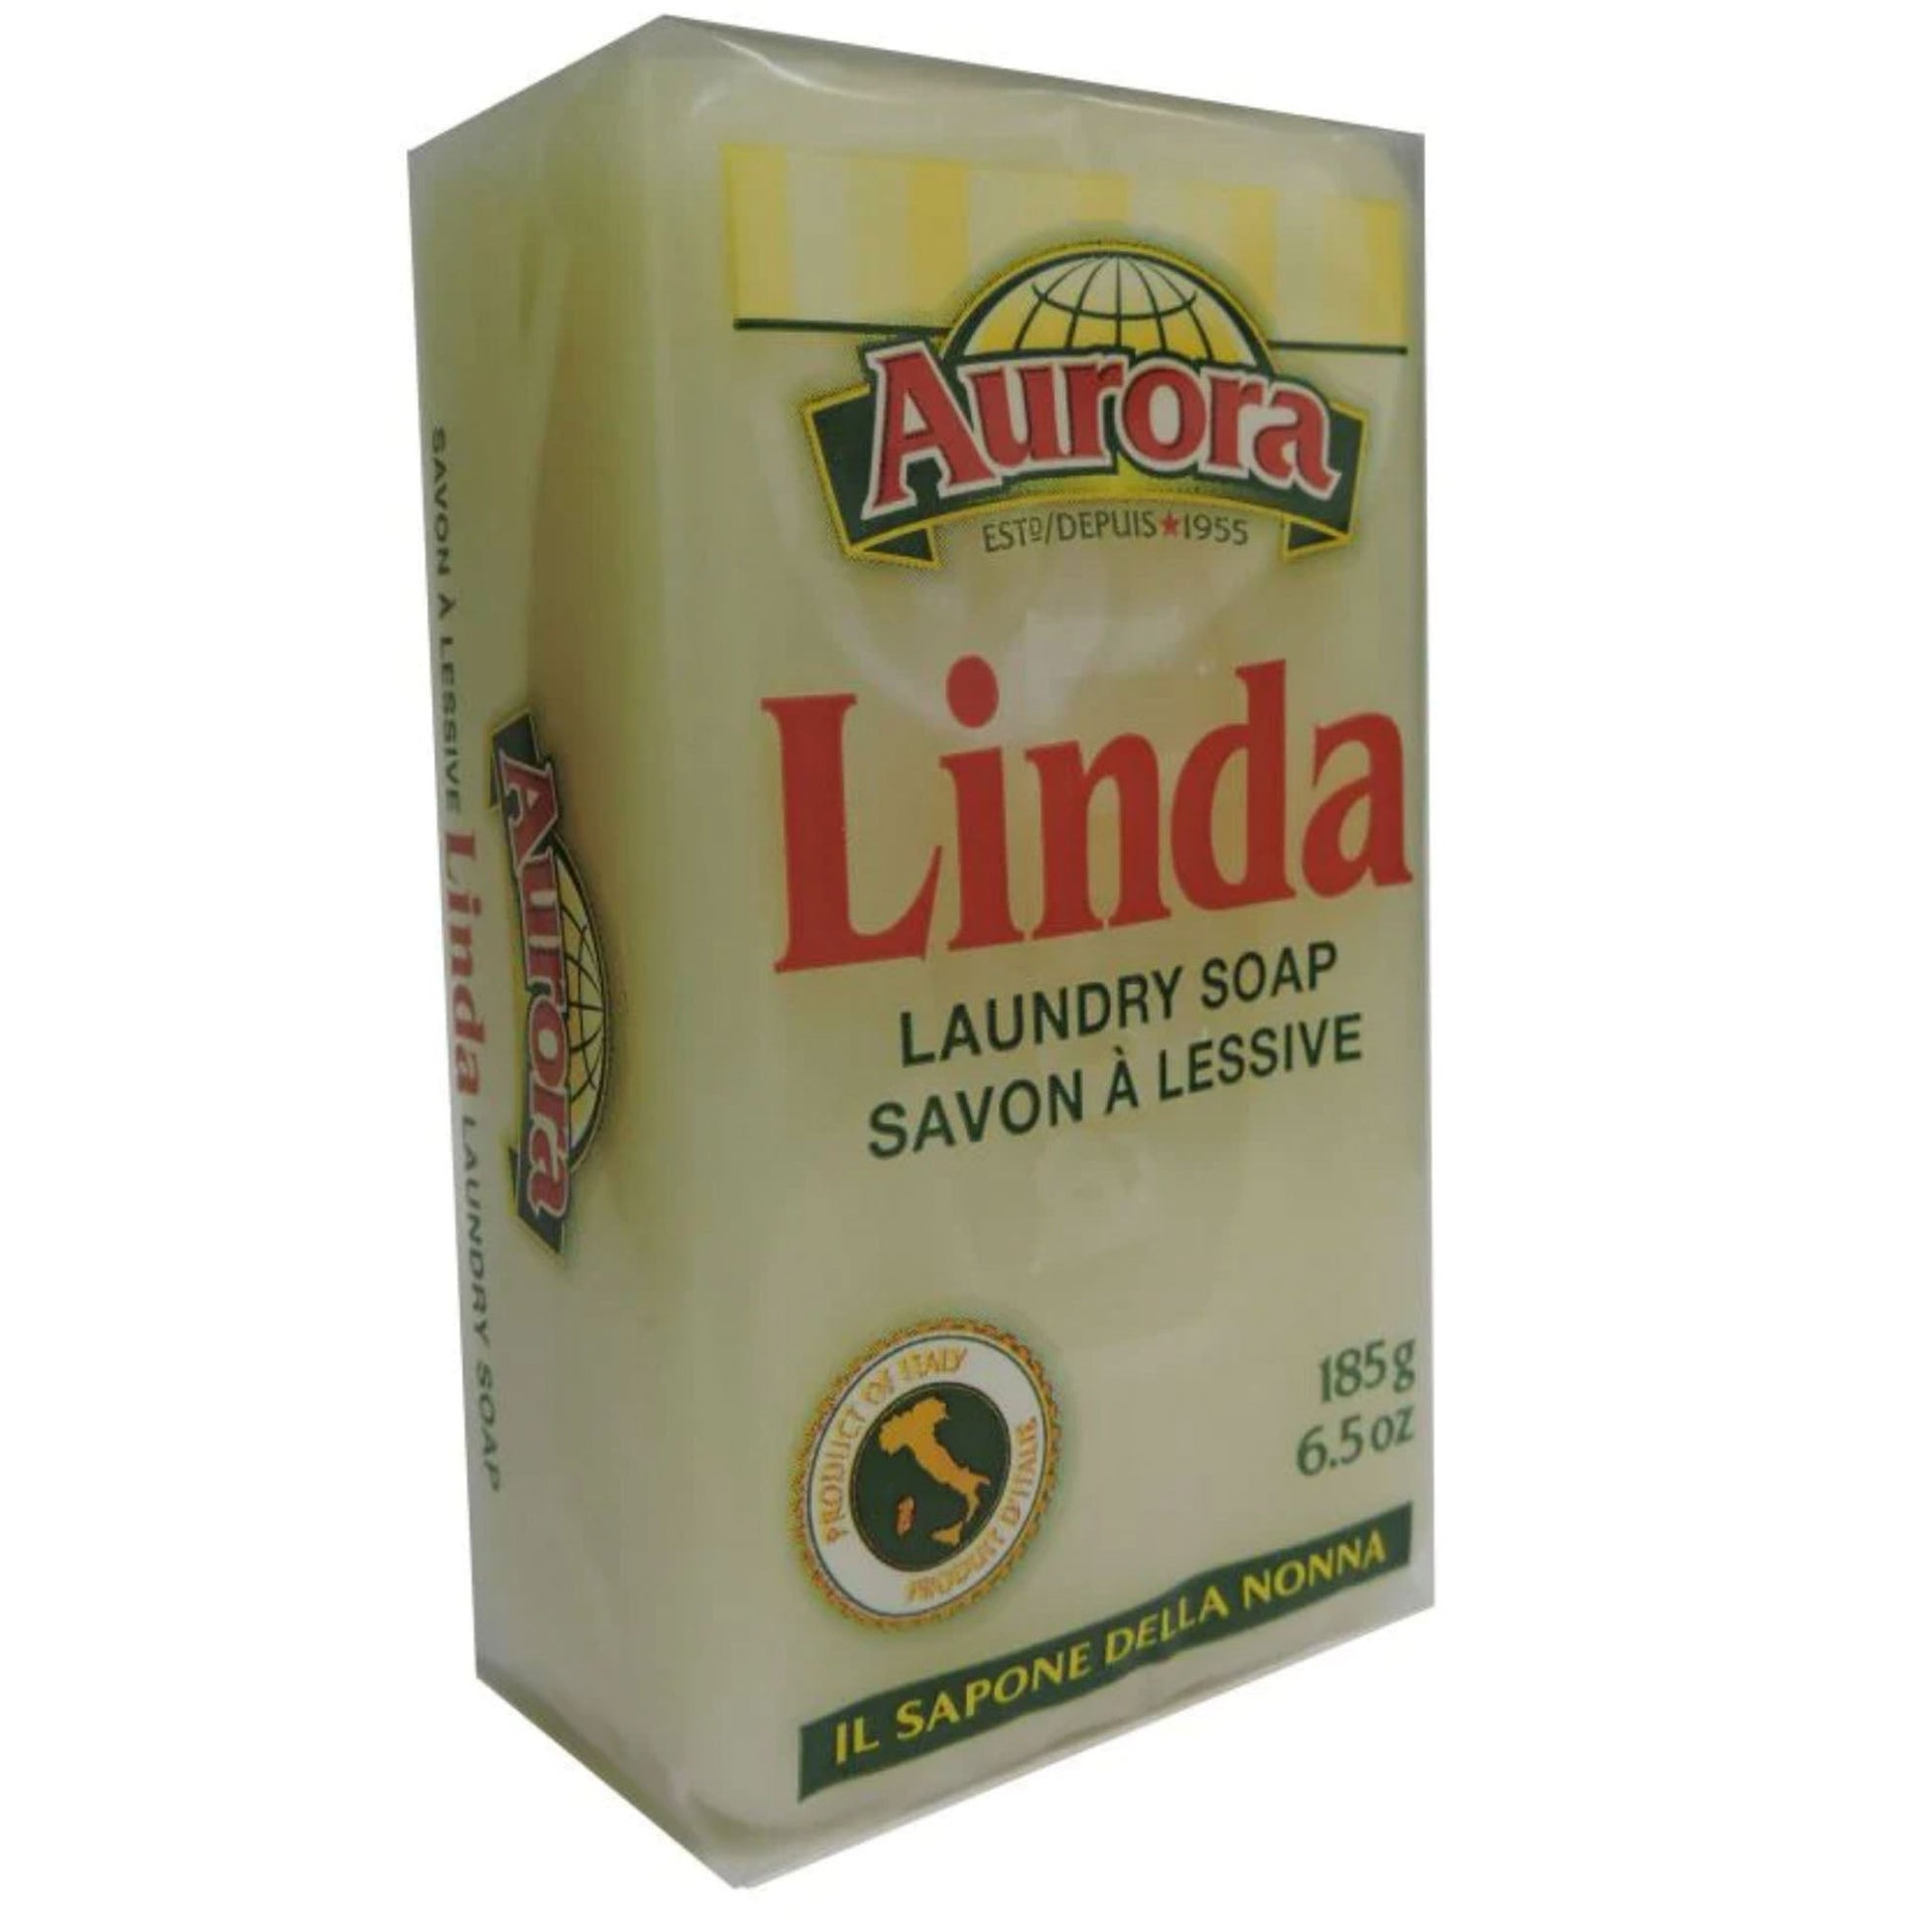 Linda Laundry Soap 185G